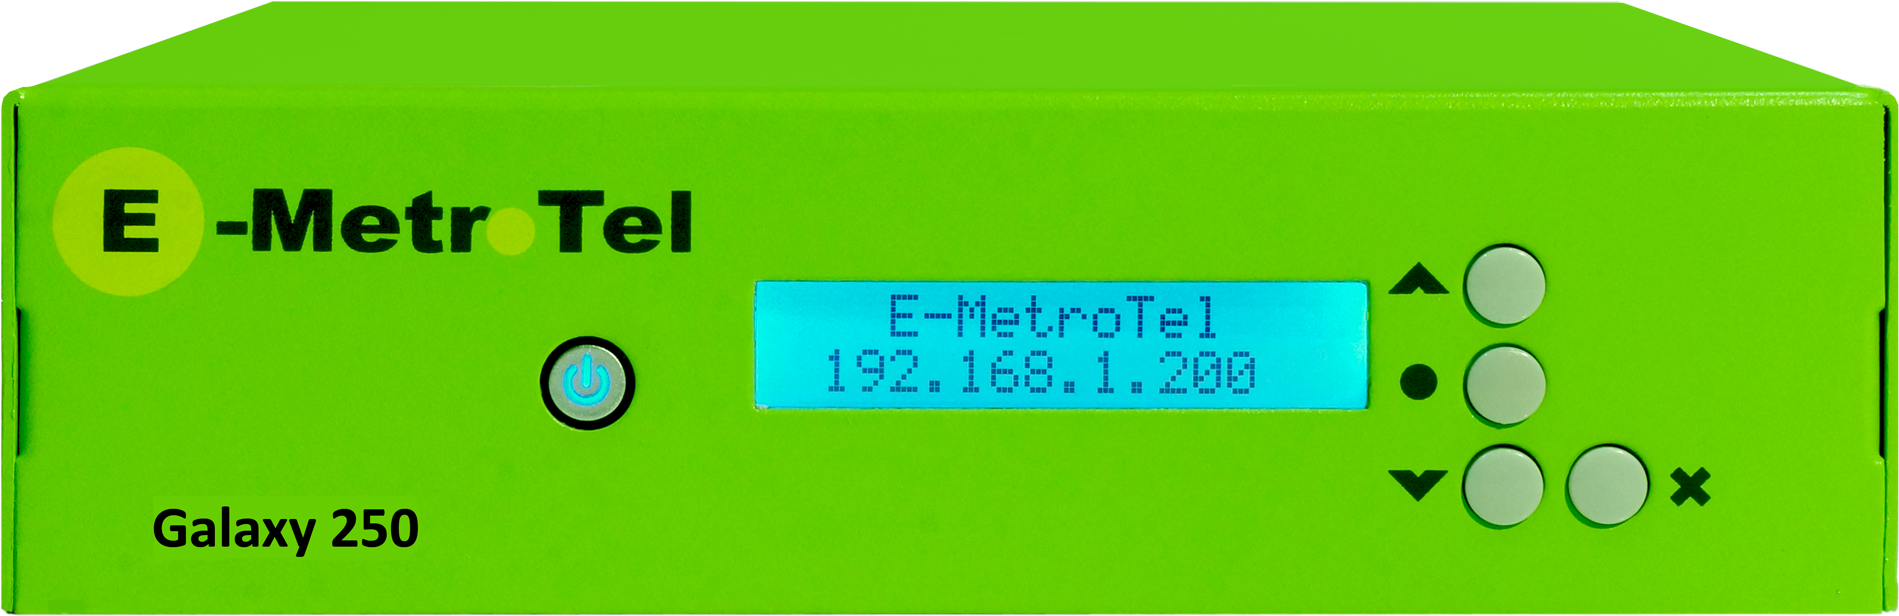 E-Metrotel Galaxy 250